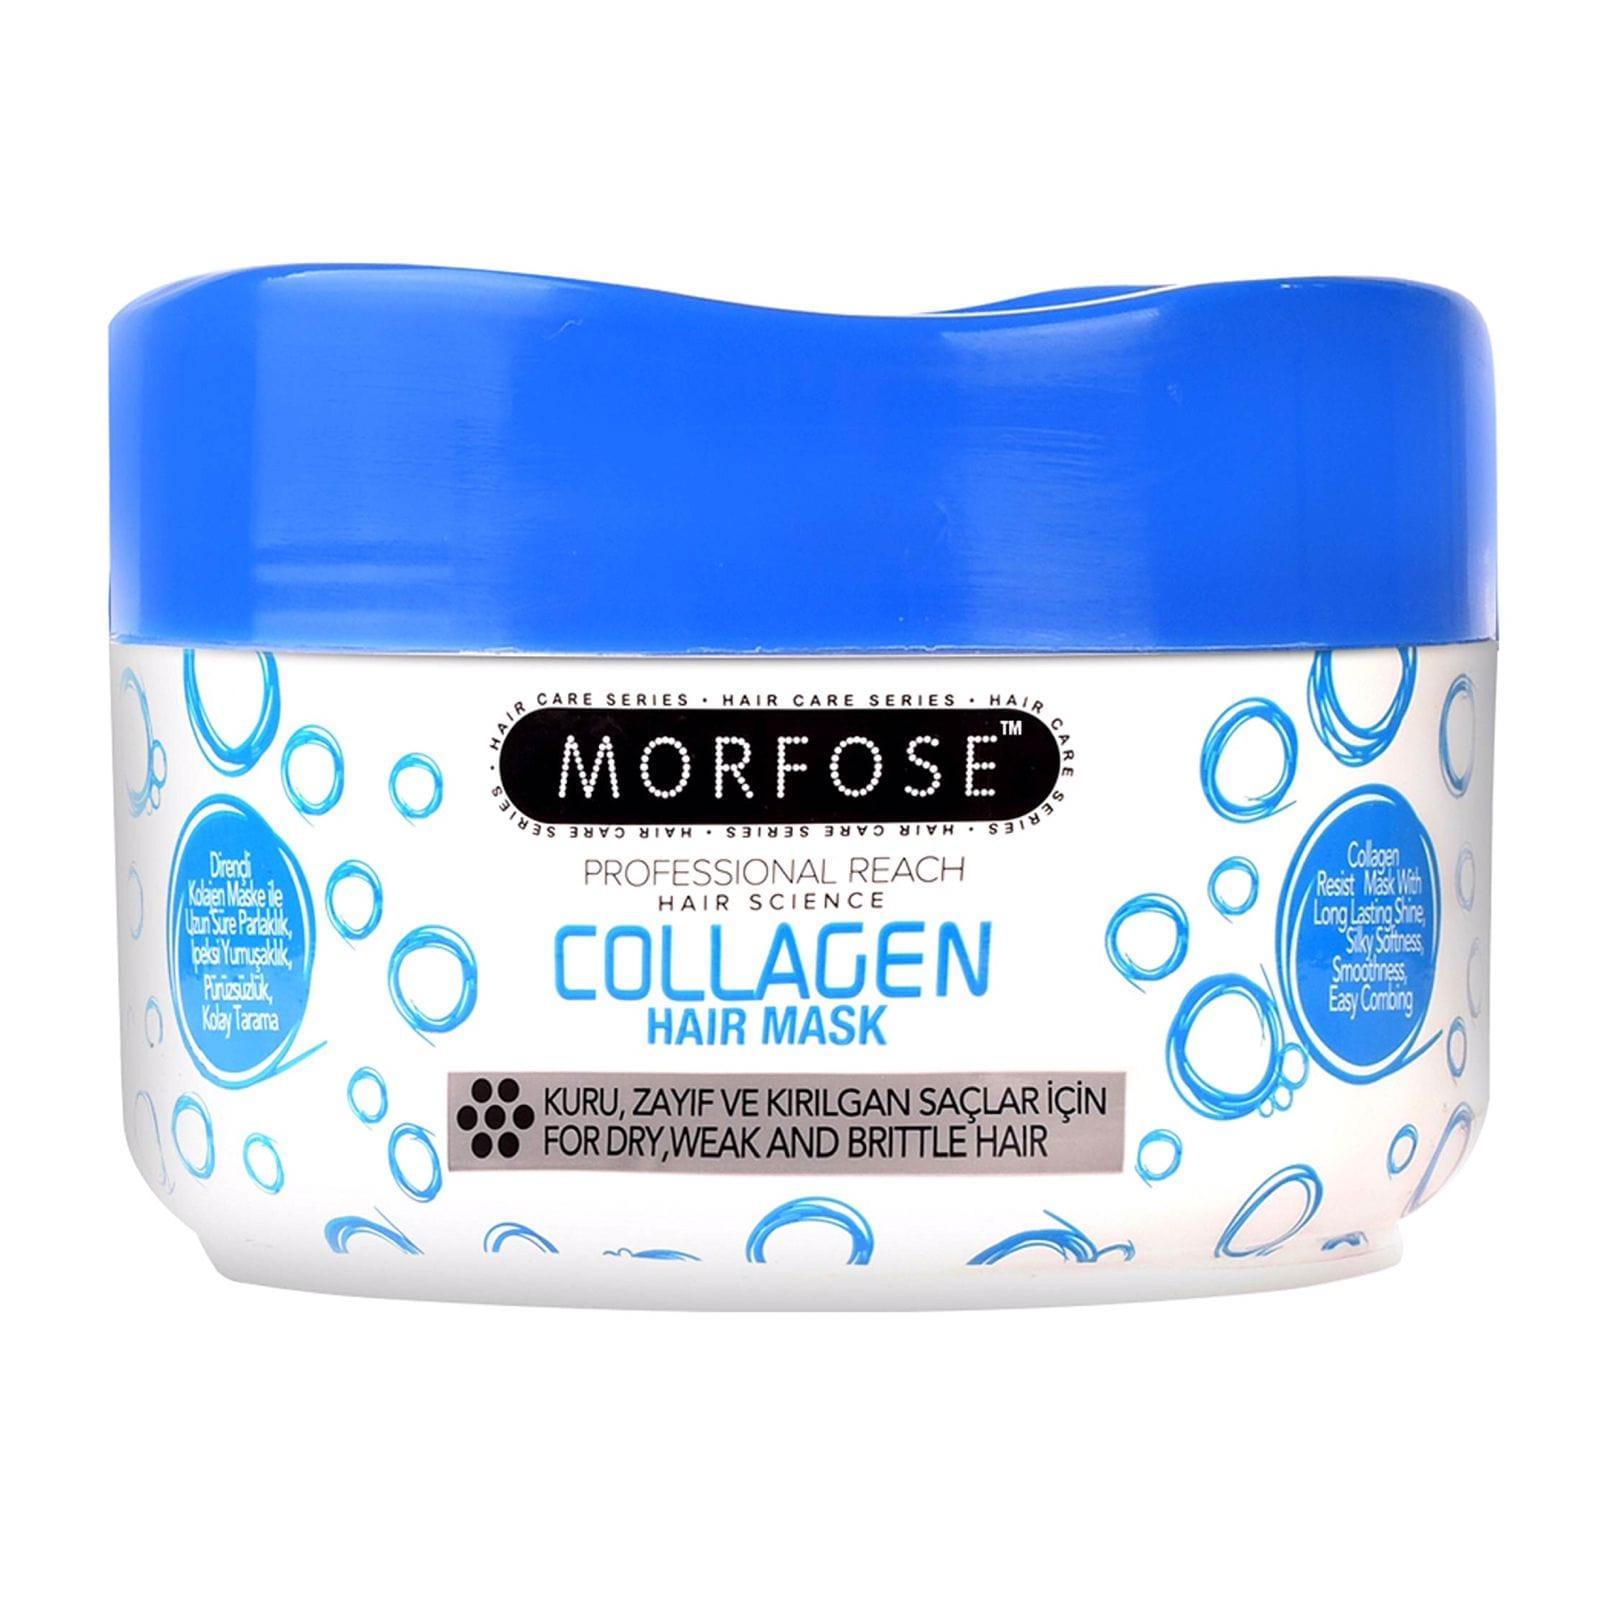 Morfose Collagen Hair Mask 250ml